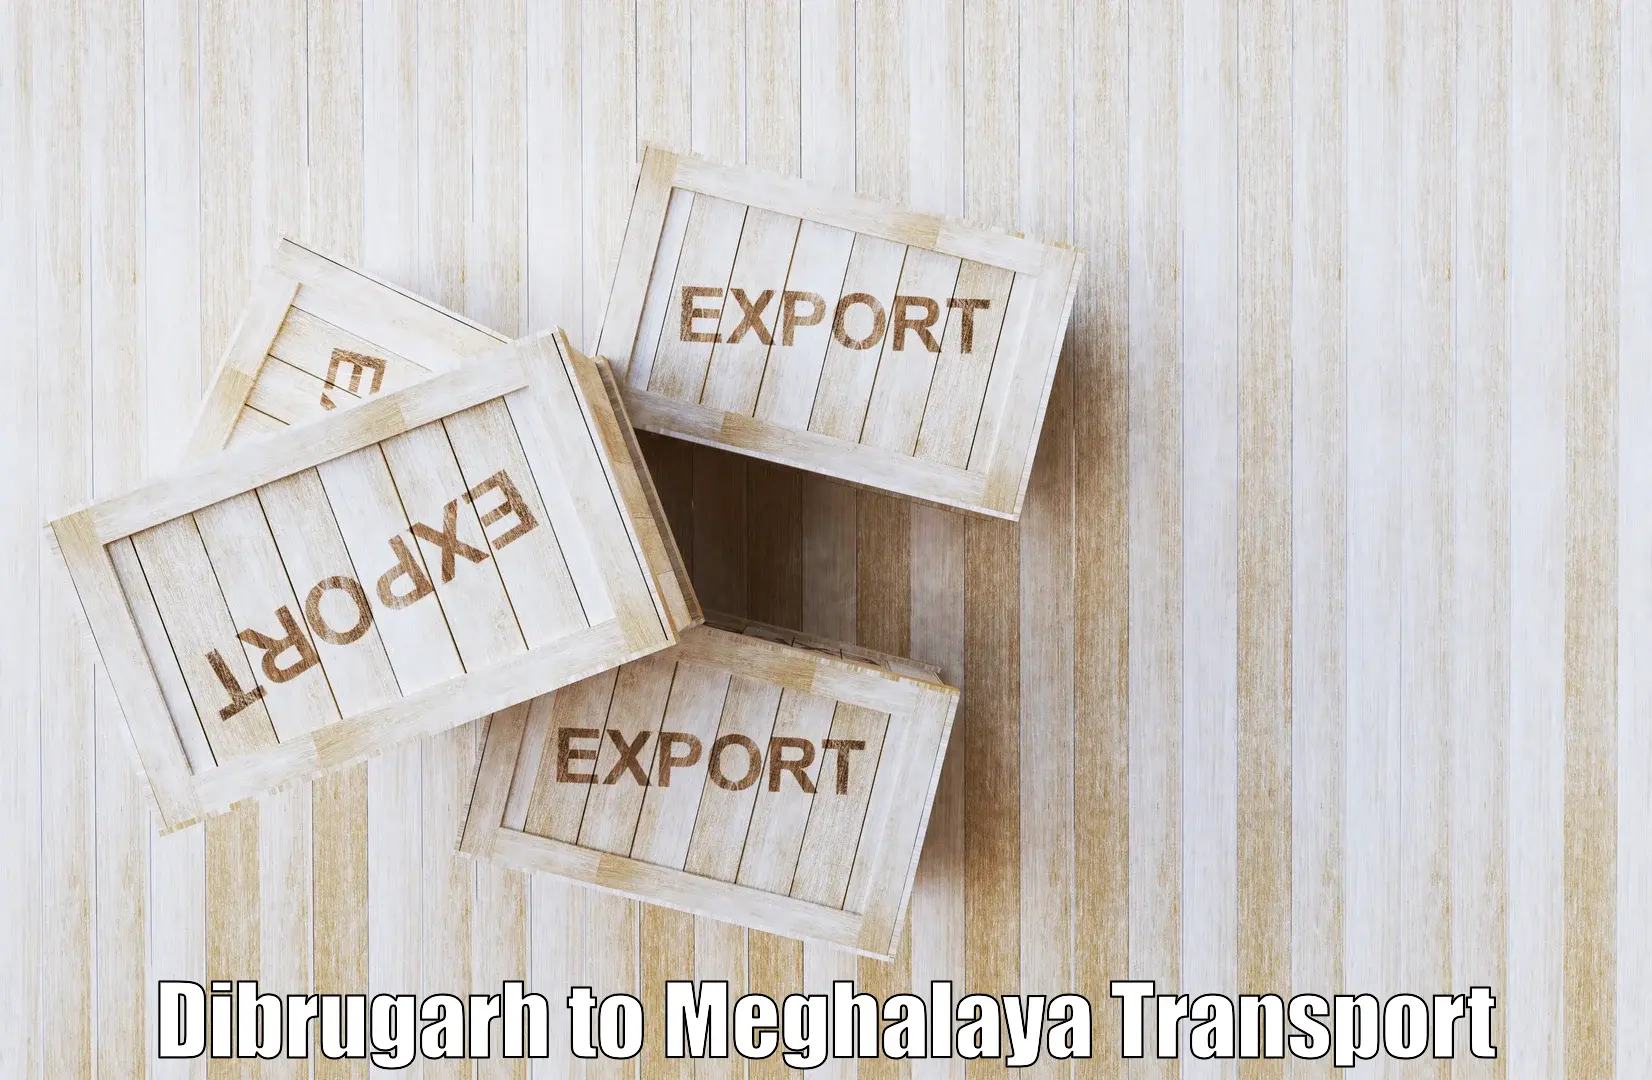 Transport shared services Dibrugarh to Cherrapunji